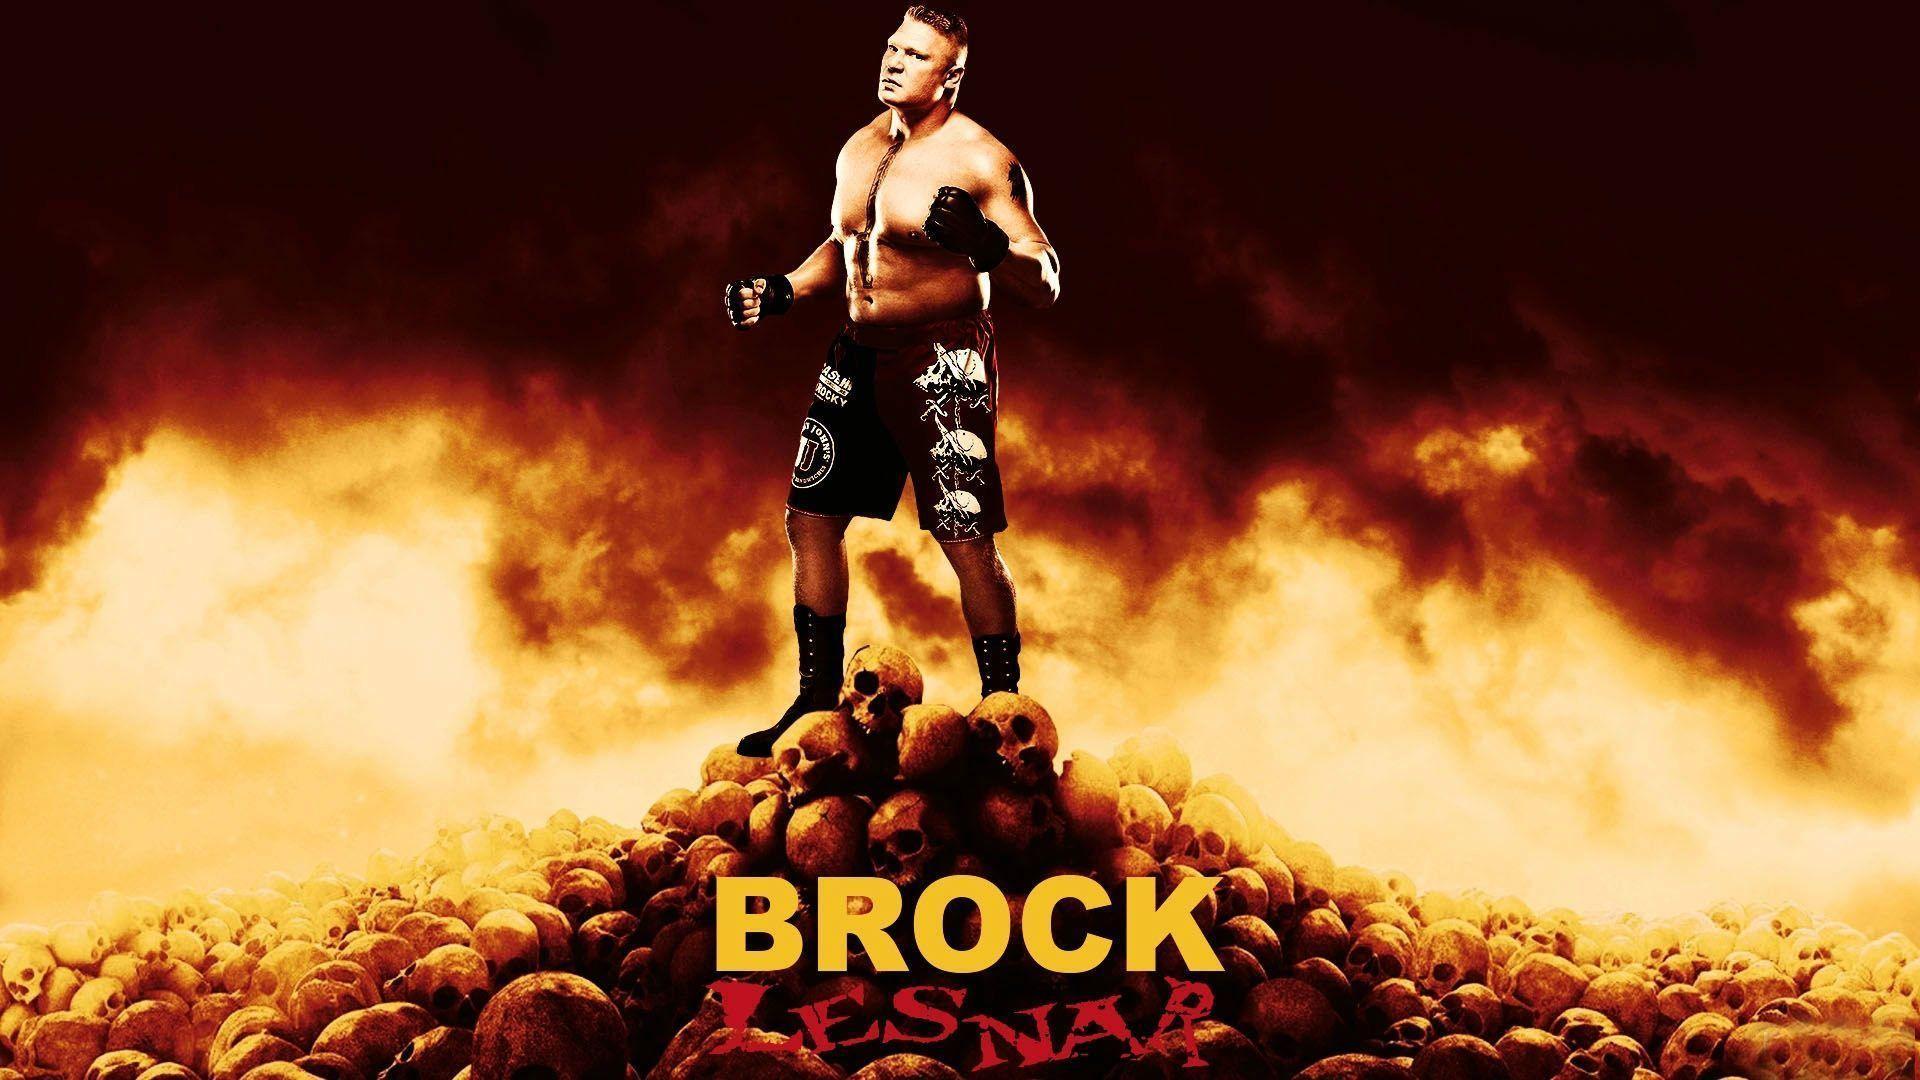 Brock Lesnar Photo Wallpaper